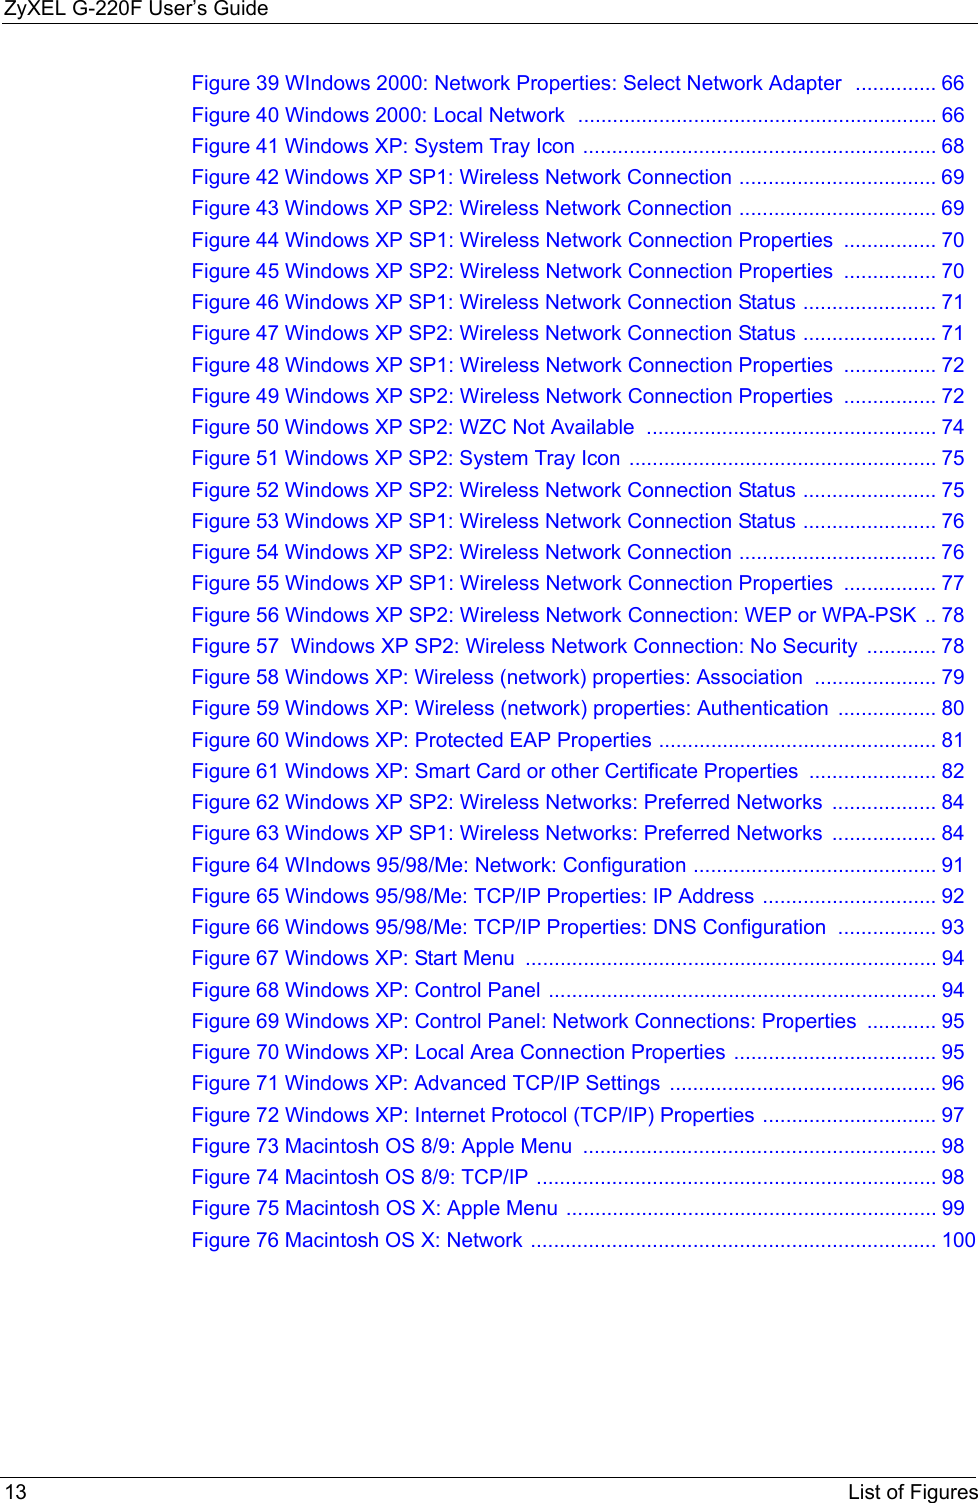 ZyXEL G-220F User’s Guide13 List of FiguresFigure 39 WIndows 2000: Network Properties: Select Network Adapter  .............. 66Figure 40 Windows 2000: Local Network  .............................................................. 66Figure 41 Windows XP: System Tray Icon ............................................................. 68Figure 42 Windows XP SP1: Wireless Network Connection .................................. 69Figure 43 Windows XP SP2: Wireless Network Connection .................................. 69Figure 44 Windows XP SP1: Wireless Network Connection Properties  ................ 70Figure 45 Windows XP SP2: Wireless Network Connection Properties  ................ 70Figure 46 Windows XP SP1: Wireless Network Connection Status ....................... 71Figure 47 Windows XP SP2: Wireless Network Connection Status ....................... 71Figure 48 Windows XP SP1: Wireless Network Connection Properties  ................ 72Figure 49 Windows XP SP2: Wireless Network Connection Properties  ................ 72Figure 50 Windows XP SP2: WZC Not Available  .................................................. 74Figure 51 Windows XP SP2: System Tray Icon  ..................................................... 75Figure 52 Windows XP SP2: Wireless Network Connection Status ....................... 75Figure 53 Windows XP SP1: Wireless Network Connection Status ....................... 76Figure 54 Windows XP SP2: Wireless Network Connection .................................. 76Figure 55 Windows XP SP1: Wireless Network Connection Properties  ................ 77Figure 56 Windows XP SP2: Wireless Network Connection: WEP or WPA-PSK  .. 78Figure 57  Windows XP SP2: Wireless Network Connection: No Security  ............ 78Figure 58 Windows XP: Wireless (network) properties: Association  ..................... 79Figure 59 Windows XP: Wireless (network) properties: Authentication  ................. 80Figure 60 Windows XP: Protected EAP Properties ................................................ 81Figure 61 Windows XP: Smart Card or other Certificate Properties  ...................... 82Figure 62 Windows XP SP2: Wireless Networks: Preferred Networks  .................. 84Figure 63 Windows XP SP1: Wireless Networks: Preferred Networks  .................. 84Figure 64 WIndows 95/98/Me: Network: Configuration .......................................... 91Figure 65 Windows 95/98/Me: TCP/IP Properties: IP Address .............................. 92Figure 66 Windows 95/98/Me: TCP/IP Properties: DNS Configuration  ................. 93Figure 67 Windows XP: Start Menu  ....................................................................... 94Figure 68 Windows XP: Control Panel ................................................................... 94Figure 69 Windows XP: Control Panel: Network Connections: Properties  ............ 95Figure 70 Windows XP: Local Area Connection Properties ................................... 95Figure 71 Windows XP: Advanced TCP/IP Settings  .............................................. 96Figure 72 Windows XP: Internet Protocol (TCP/IP) Properties .............................. 97Figure 73 Macintosh OS 8/9: Apple Menu  ............................................................. 98Figure 74 Macintosh OS 8/9: TCP/IP ..................................................................... 98Figure 75 Macintosh OS X: Apple Menu ................................................................ 99Figure 76 Macintosh OS X: Network ...................................................................... 100